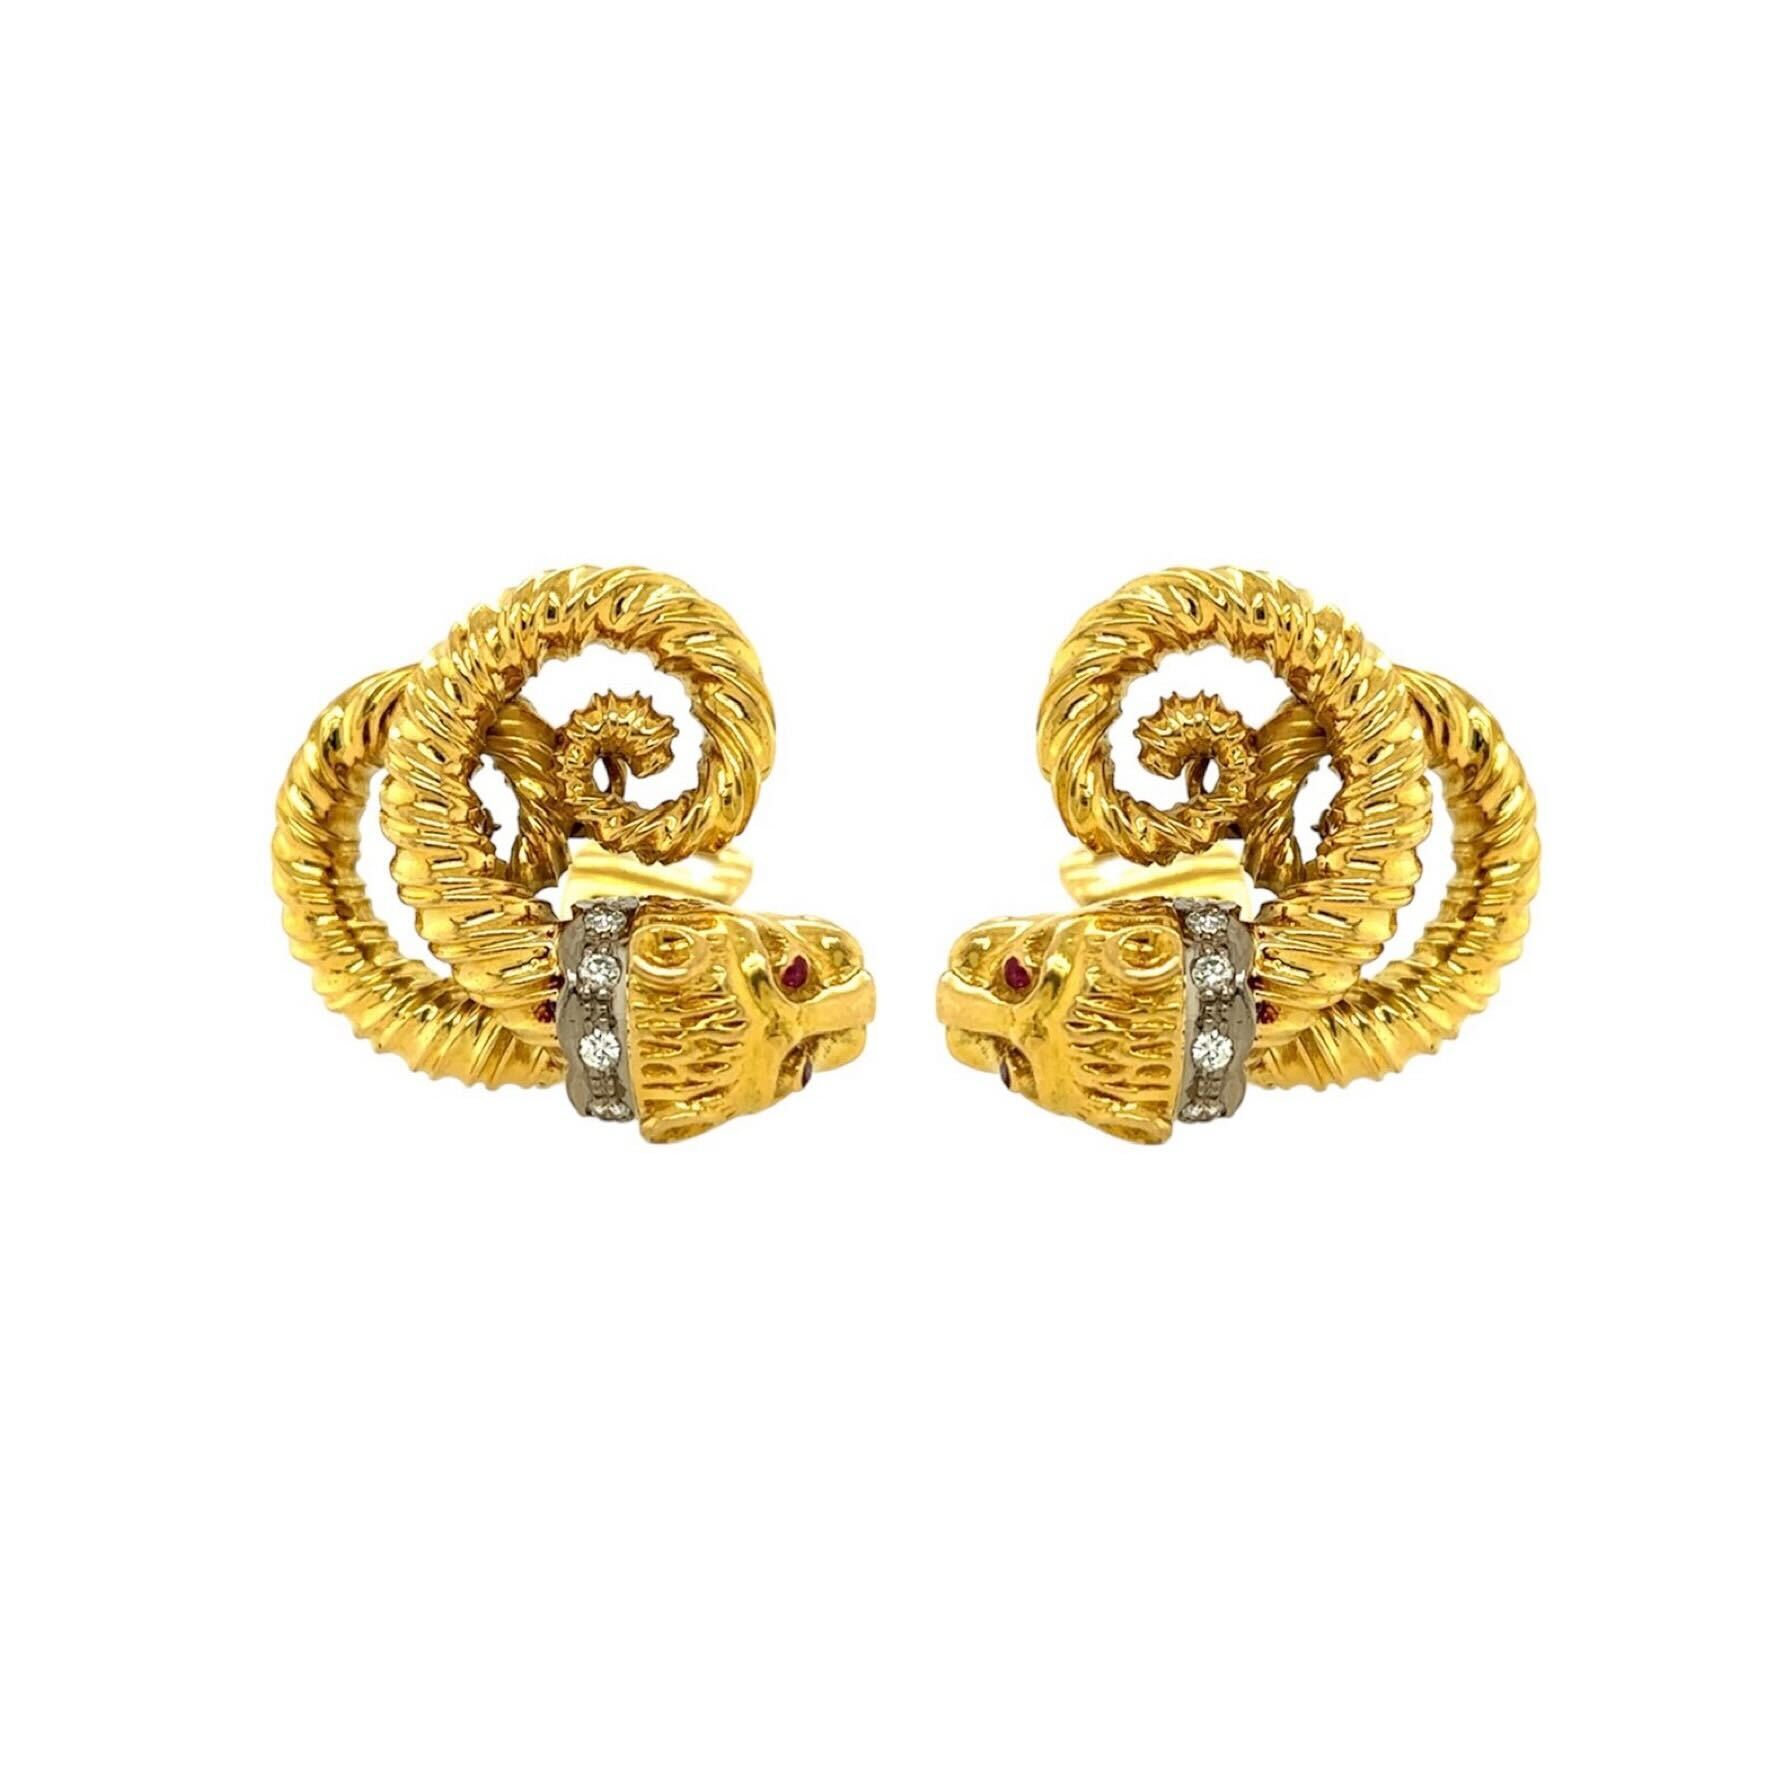 Zolotas Mythical Beast Gold Diamond Earrings | $0 CDB Jewelry